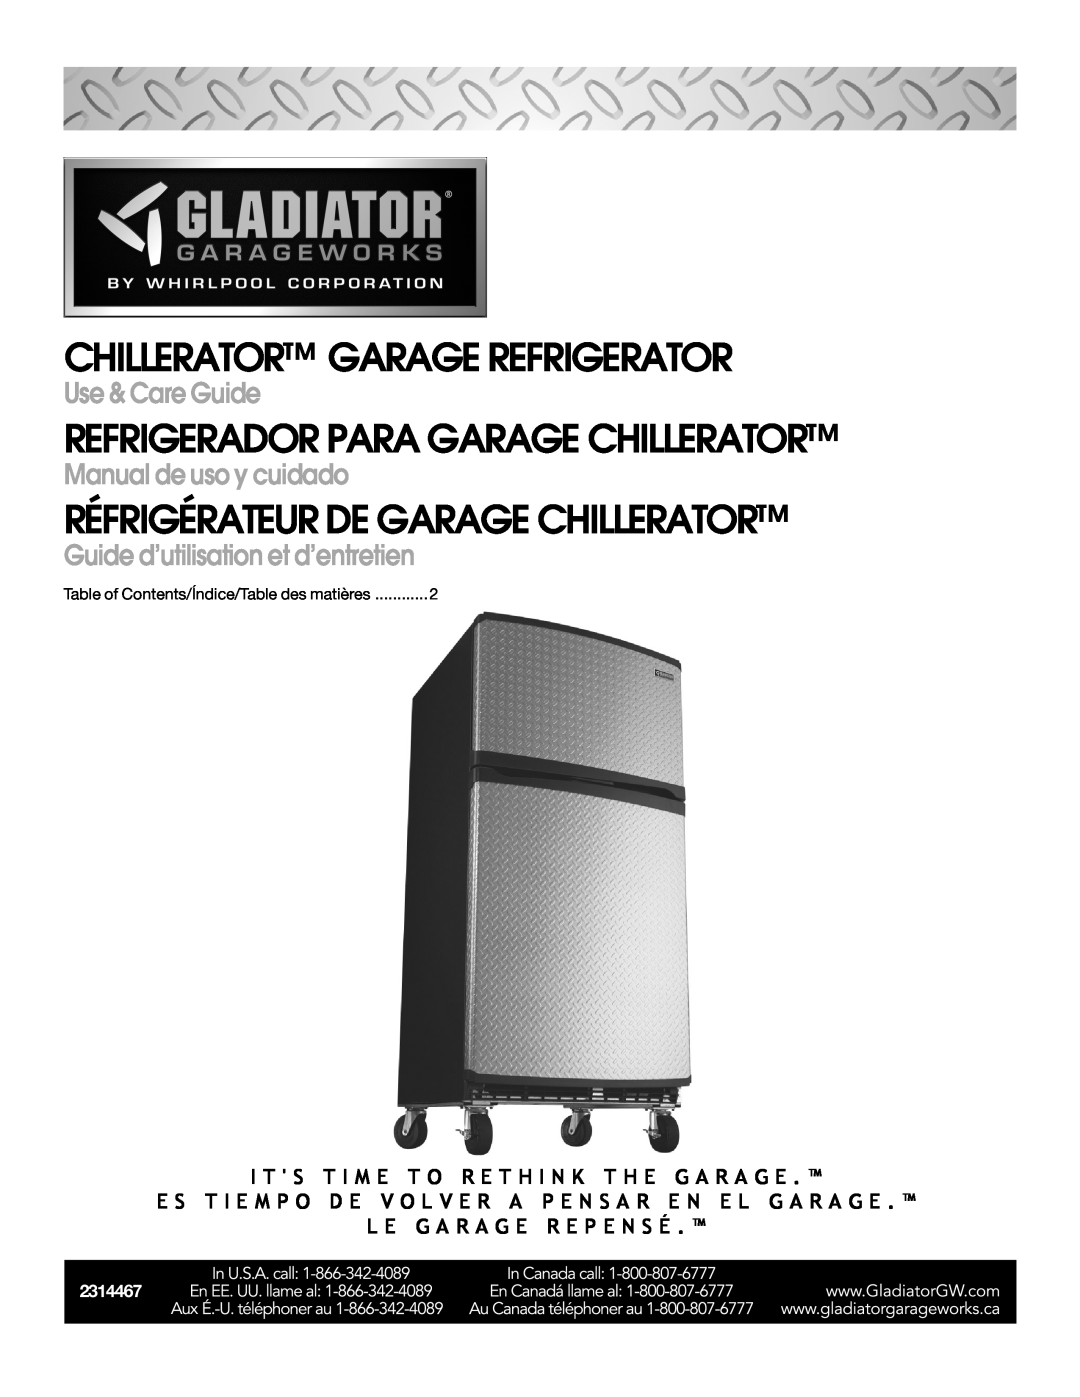 Whirlpool GARAGE REFRIGERATOR manual Chillerator Garage Refrigerator, Refrigerador Para Garage Chillerator, 2314467 